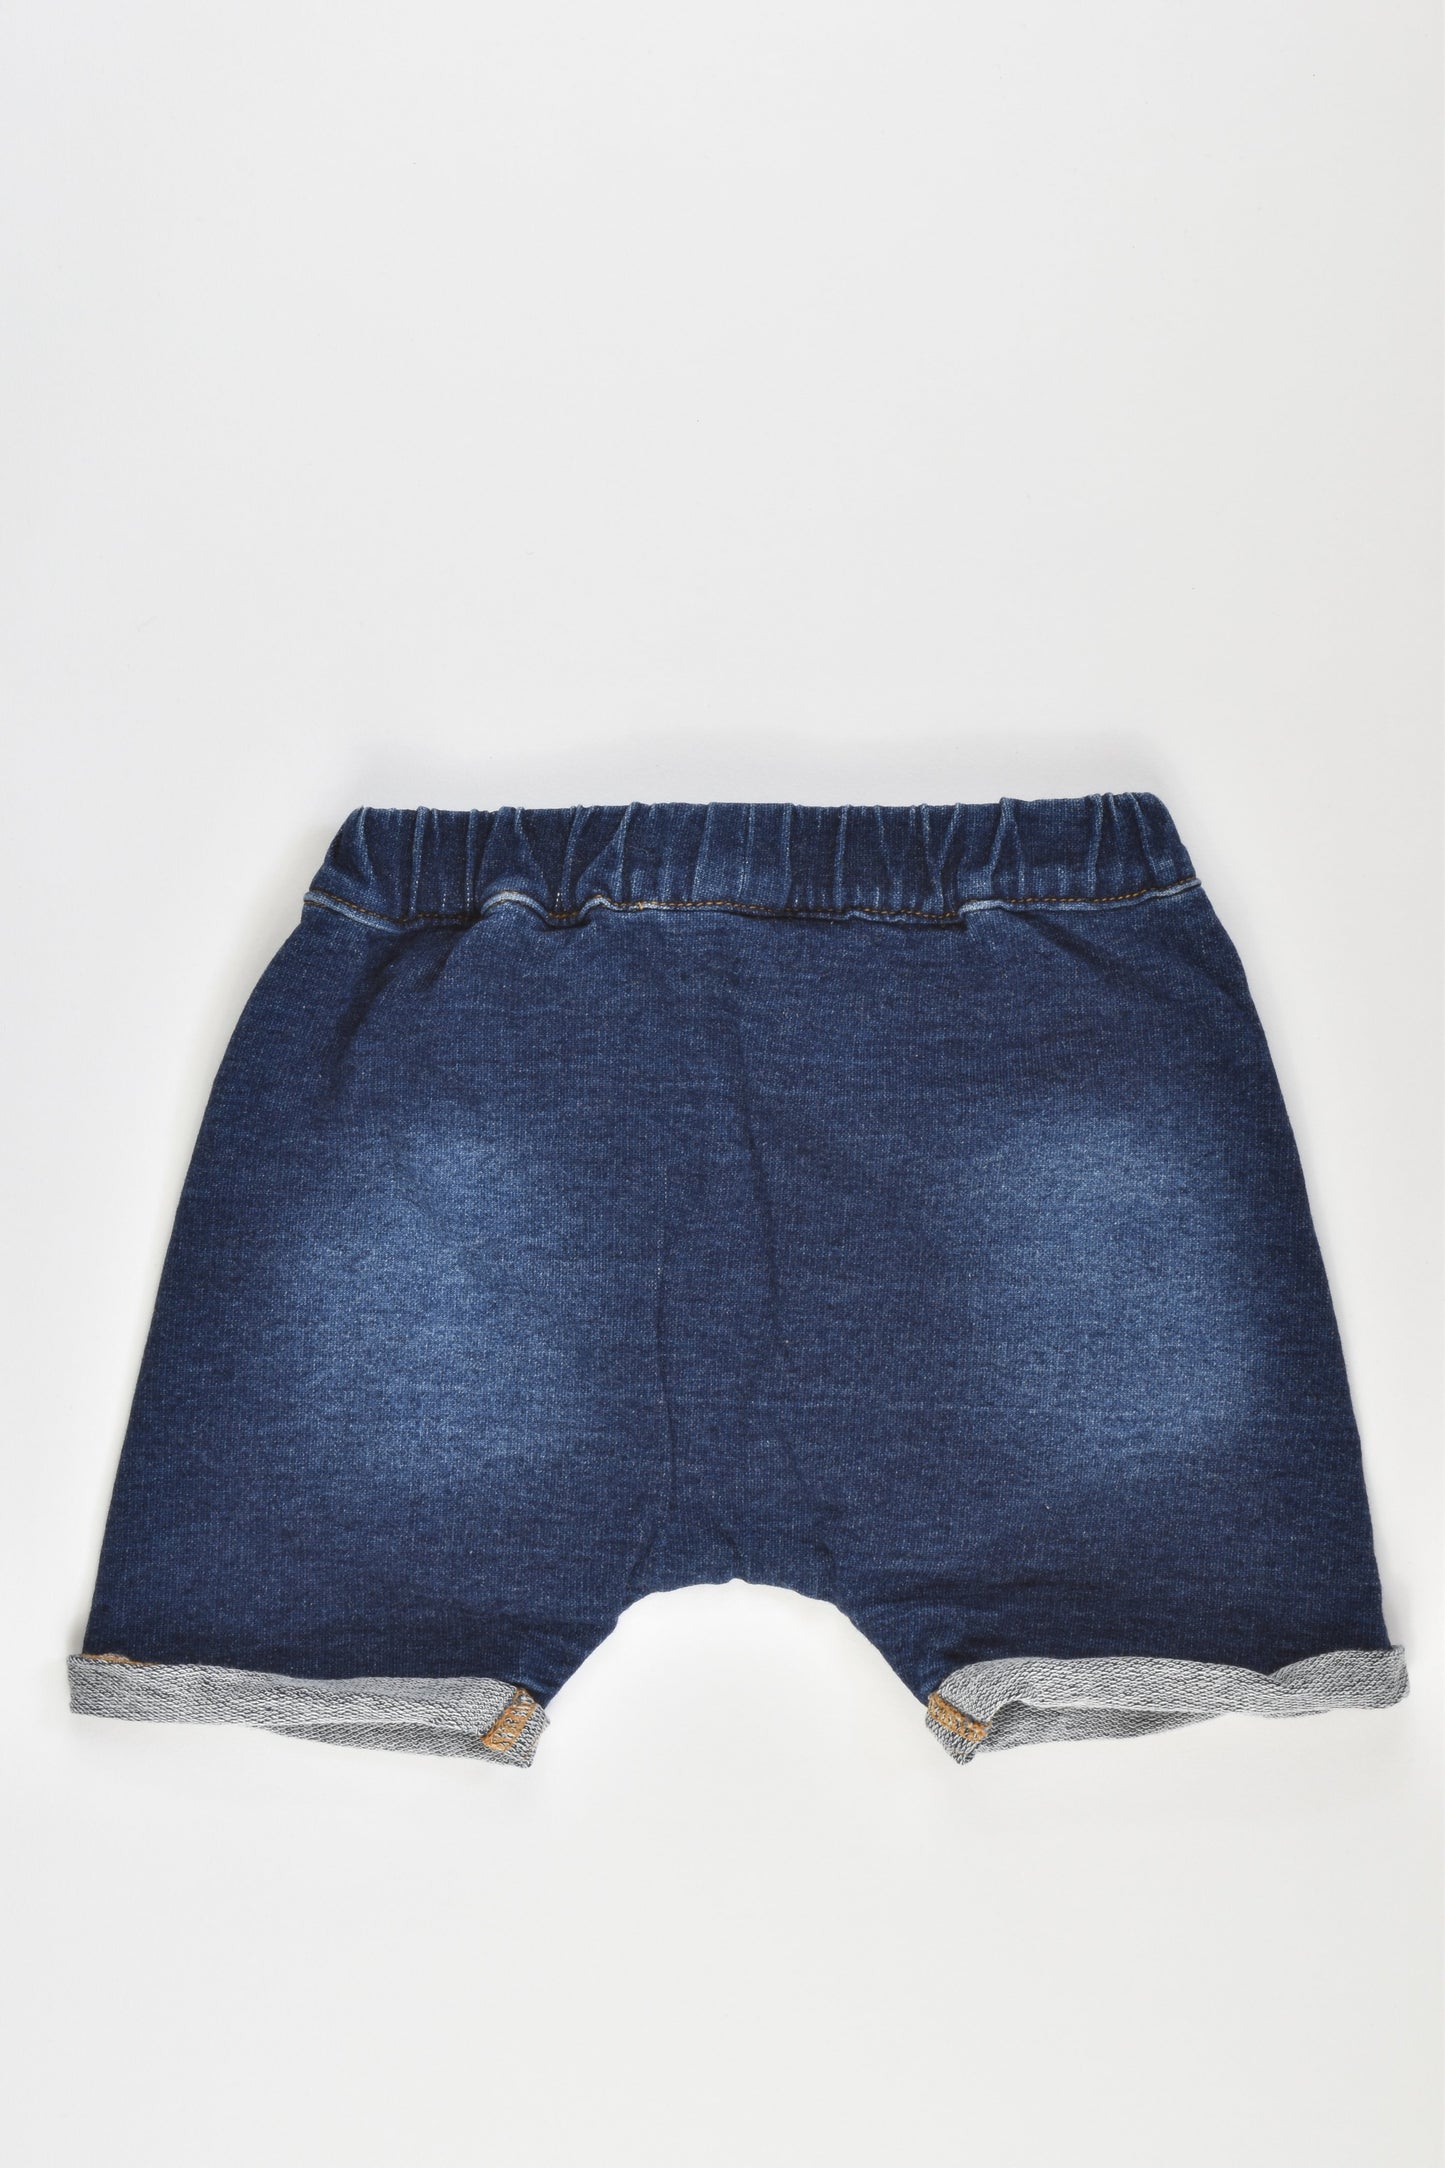 NEW Fox & Finch Baby Size 0 Soft Denim Shorts